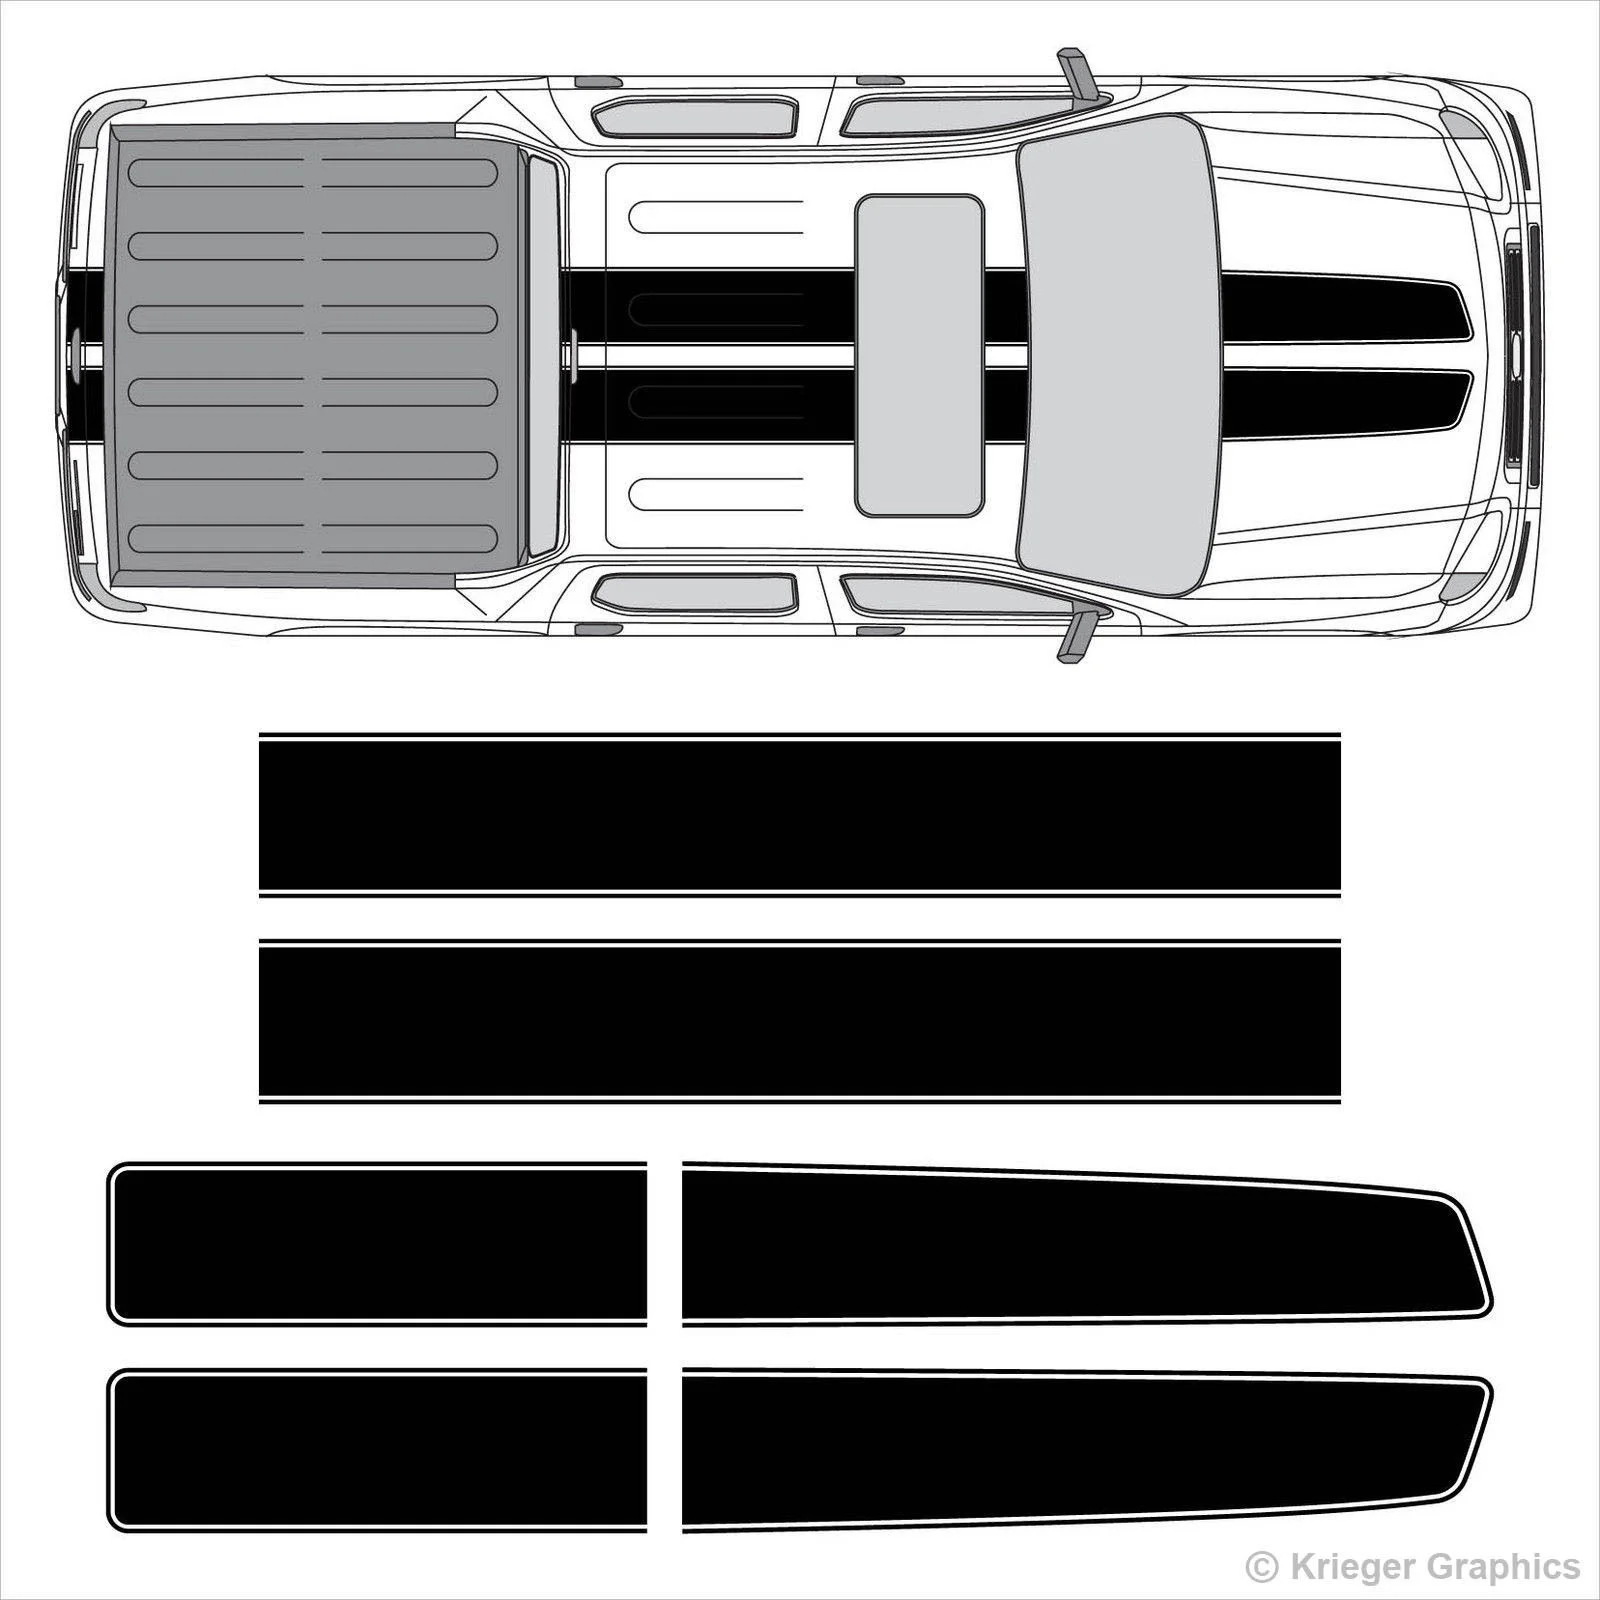 

For 1set 3Pcs/1Pair Ridgeline EZ Rally Racing Stripes Vinyl Stripe Decals Graphics Car styling